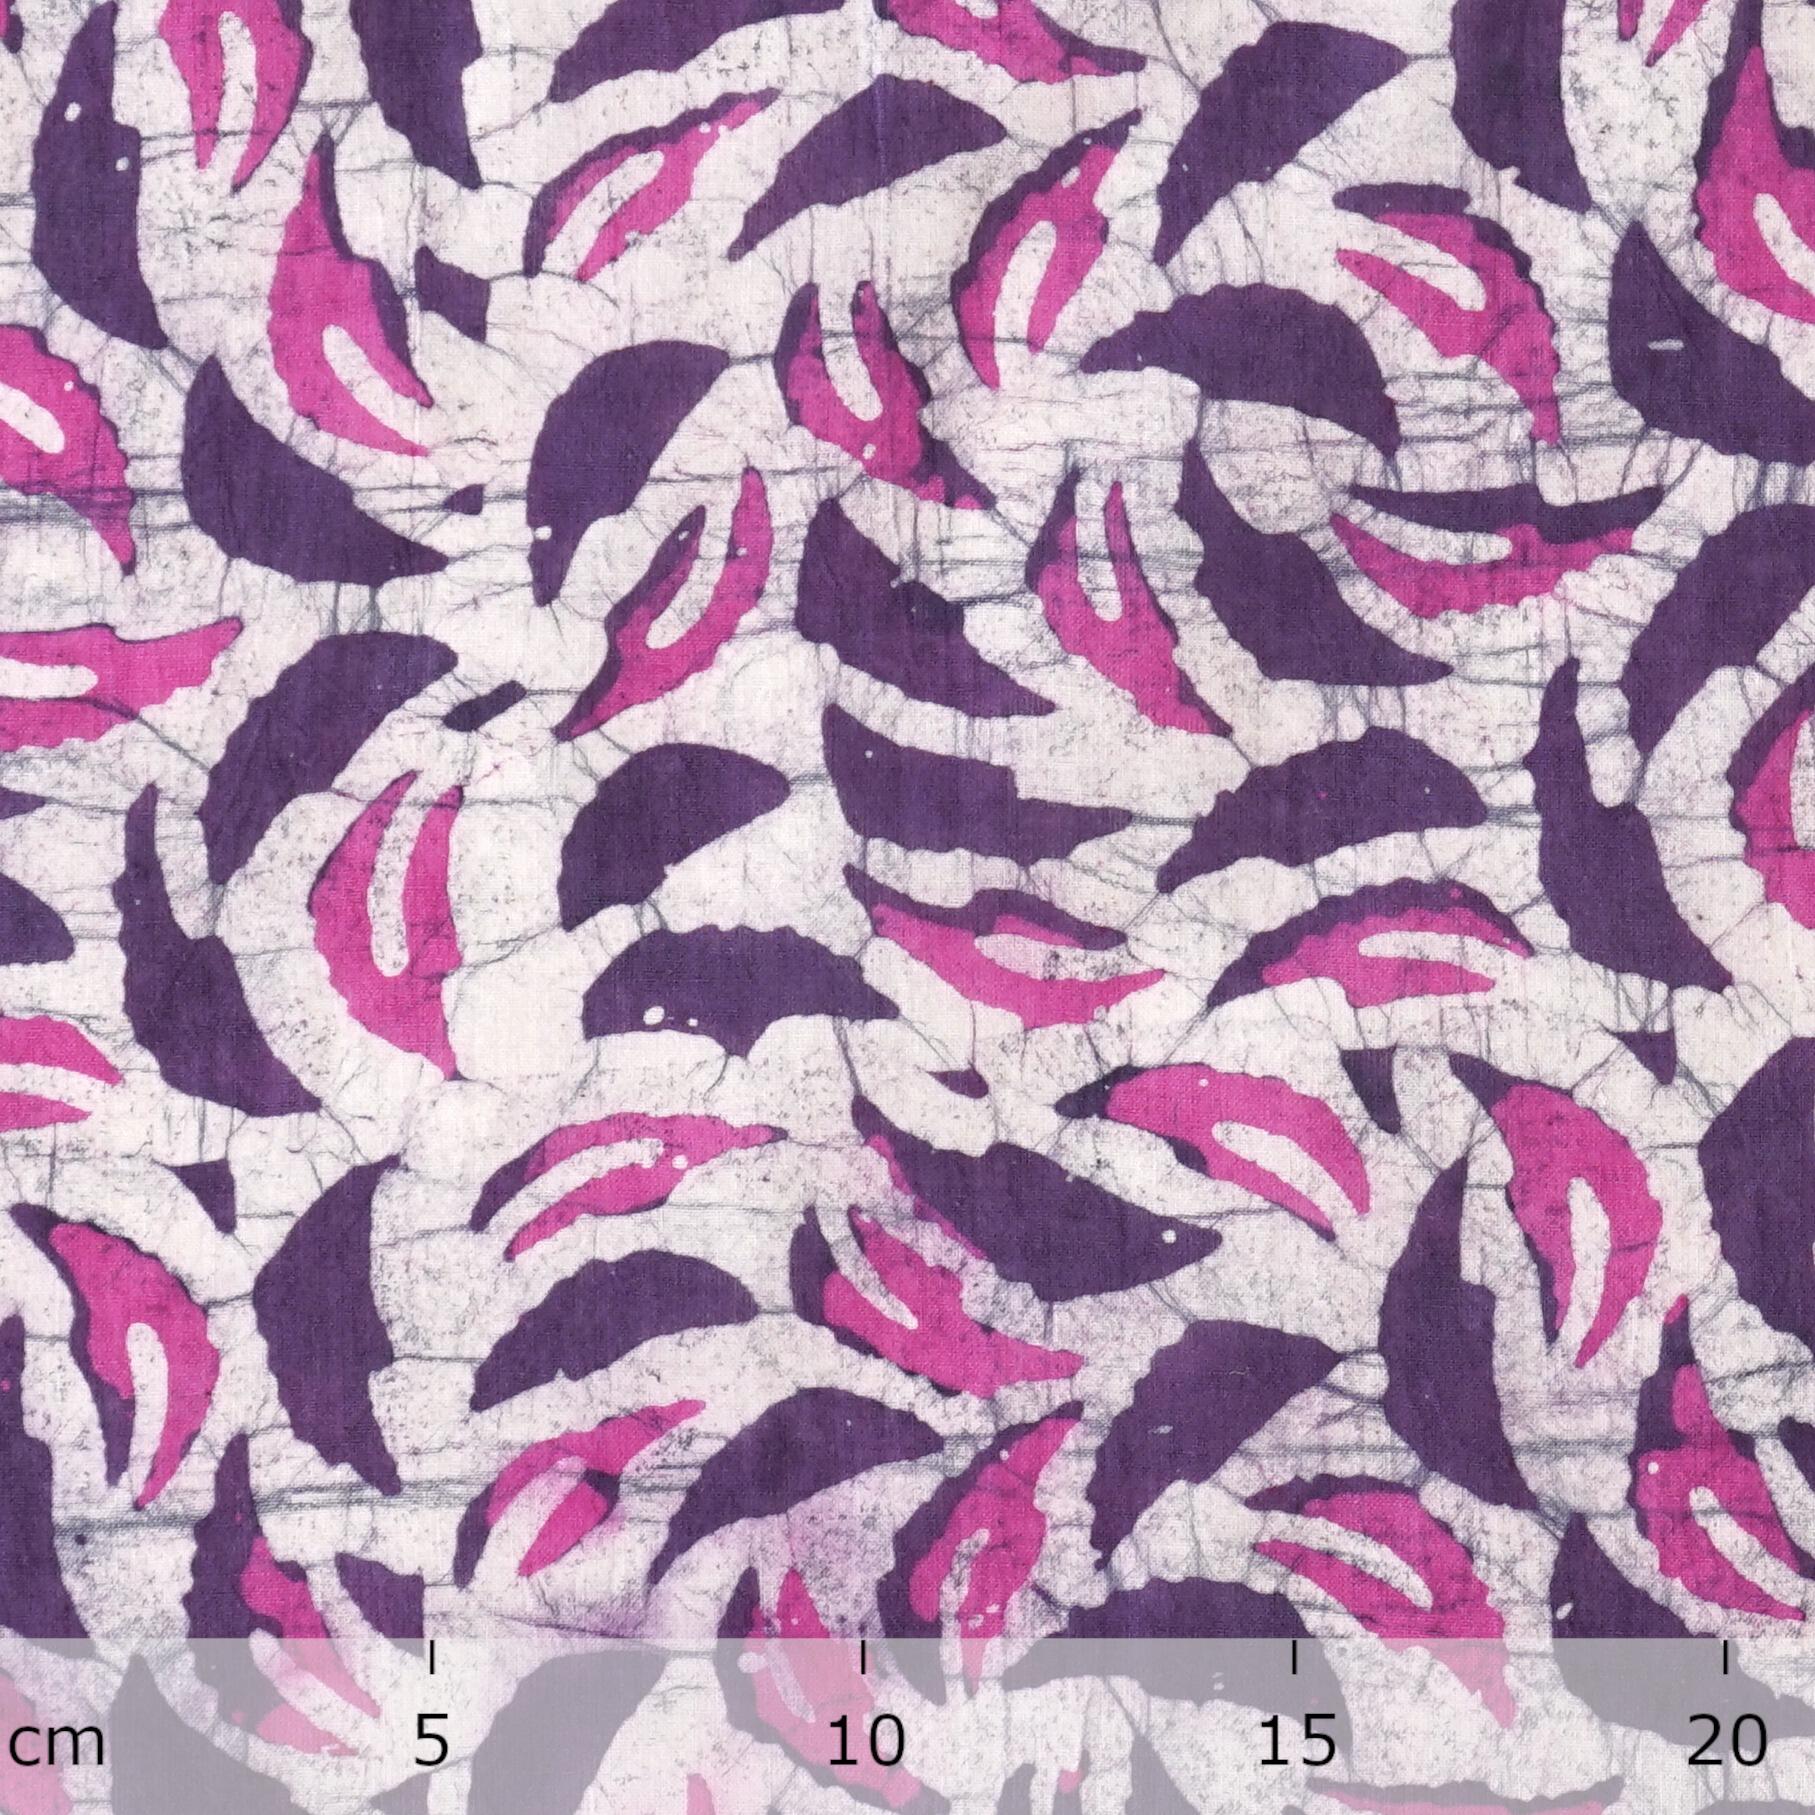 100% Block-Printed Batik Cotton Fabric From India - Purple Rain Motif - Ruler